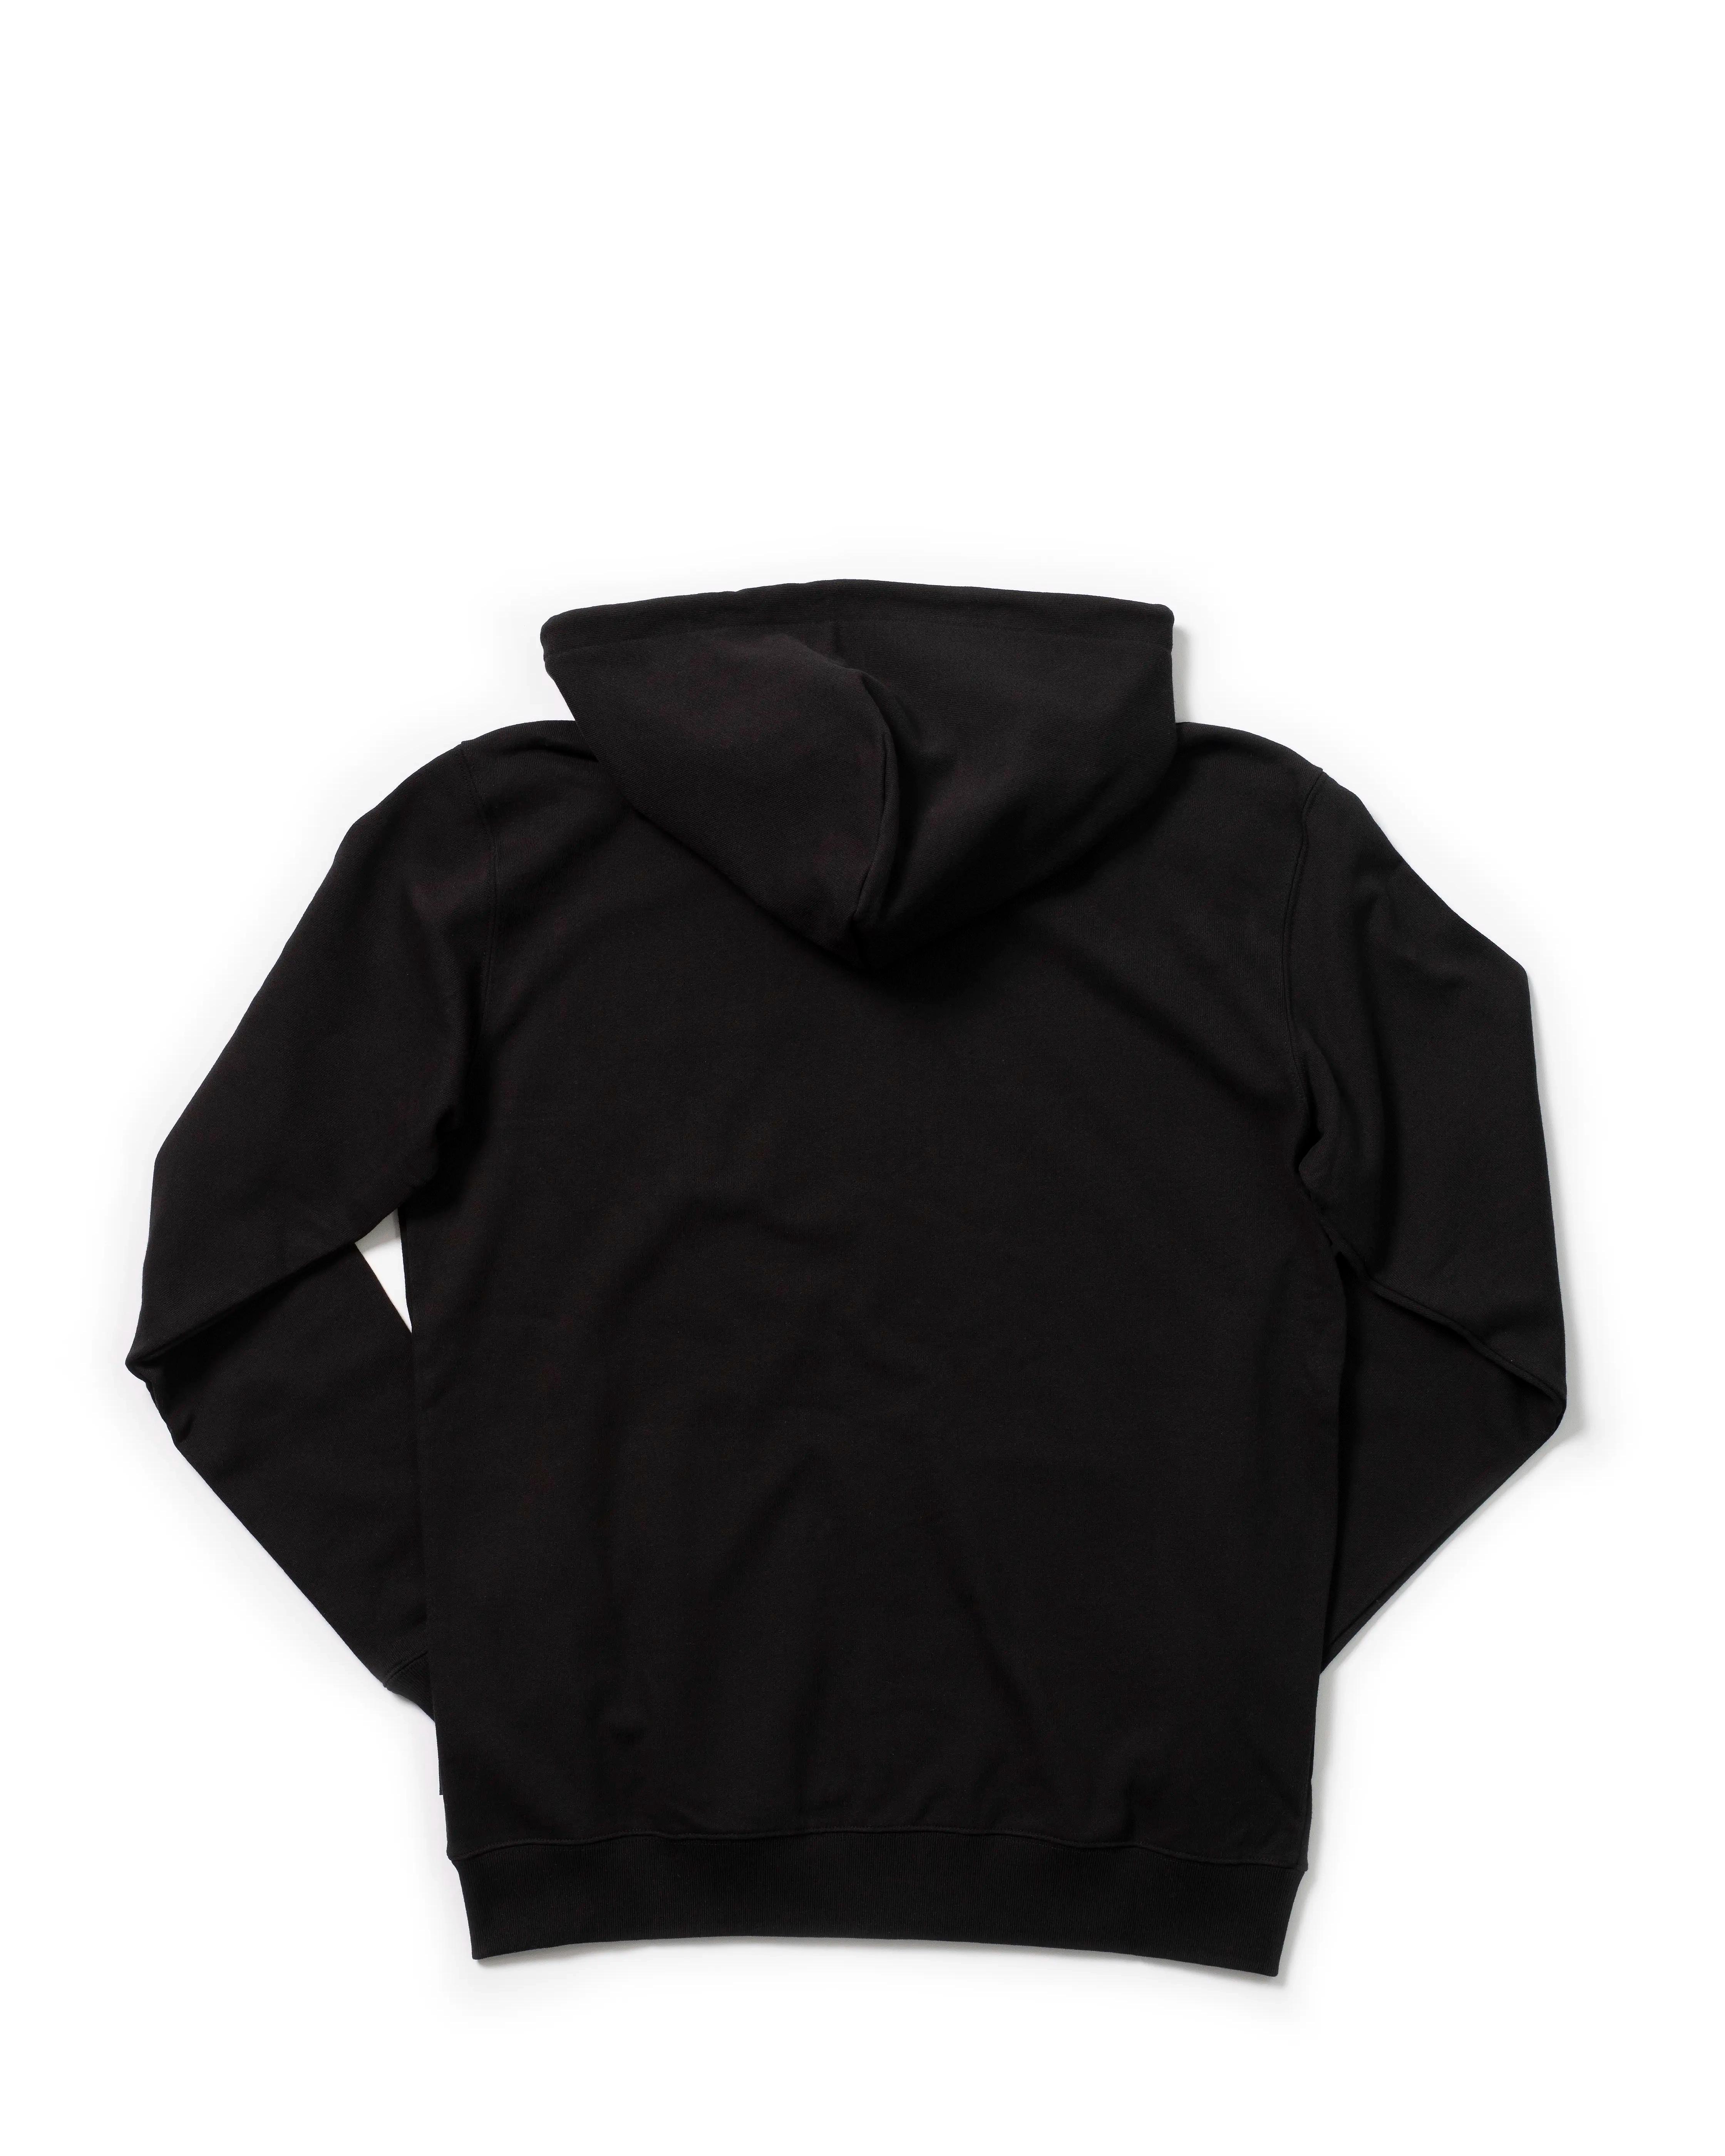 Photo of Profile Zip Hooded Sweatshirt, Black